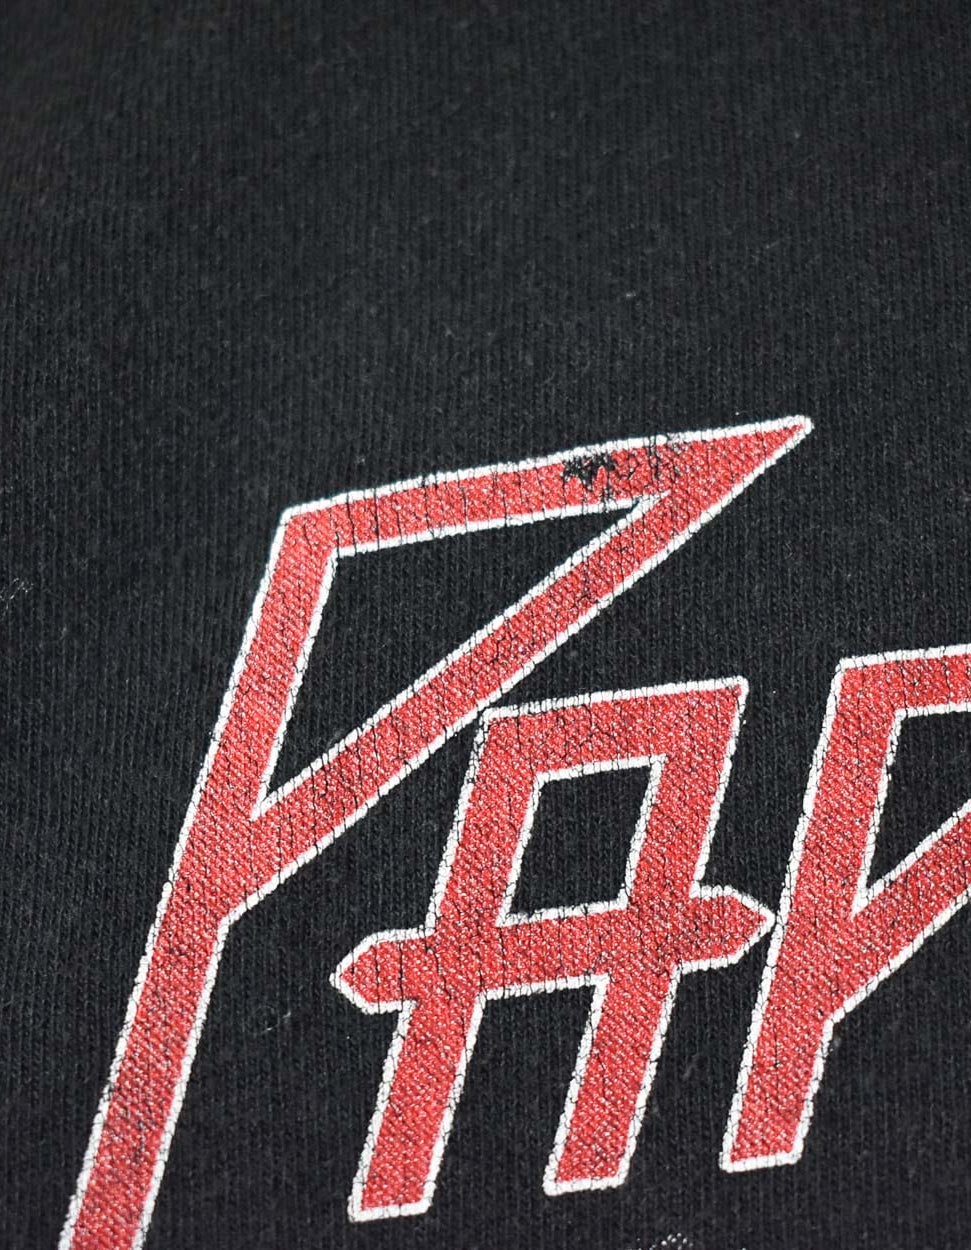 Black Papa Roach Graphic T-Shirt - Small